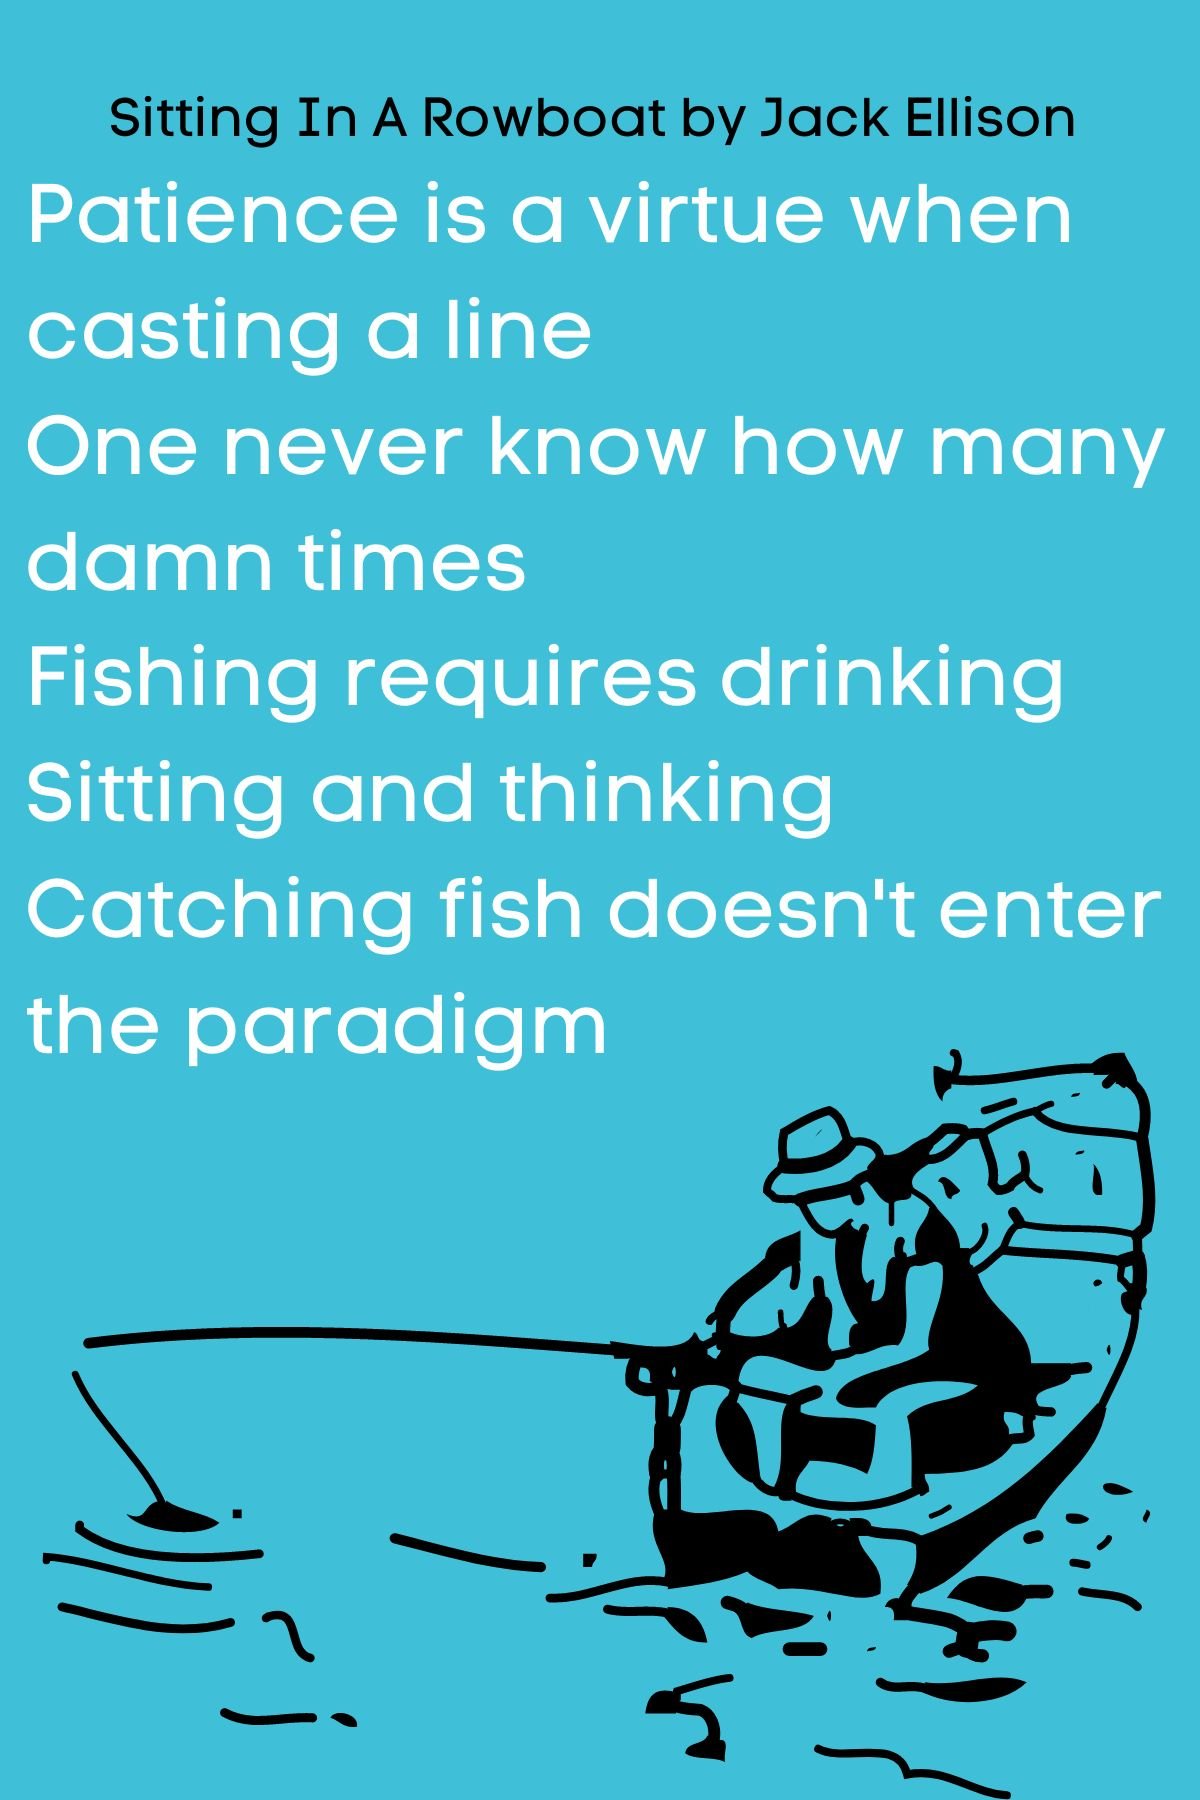 25 Short Fishing Poems & Lyrics For The Boat 